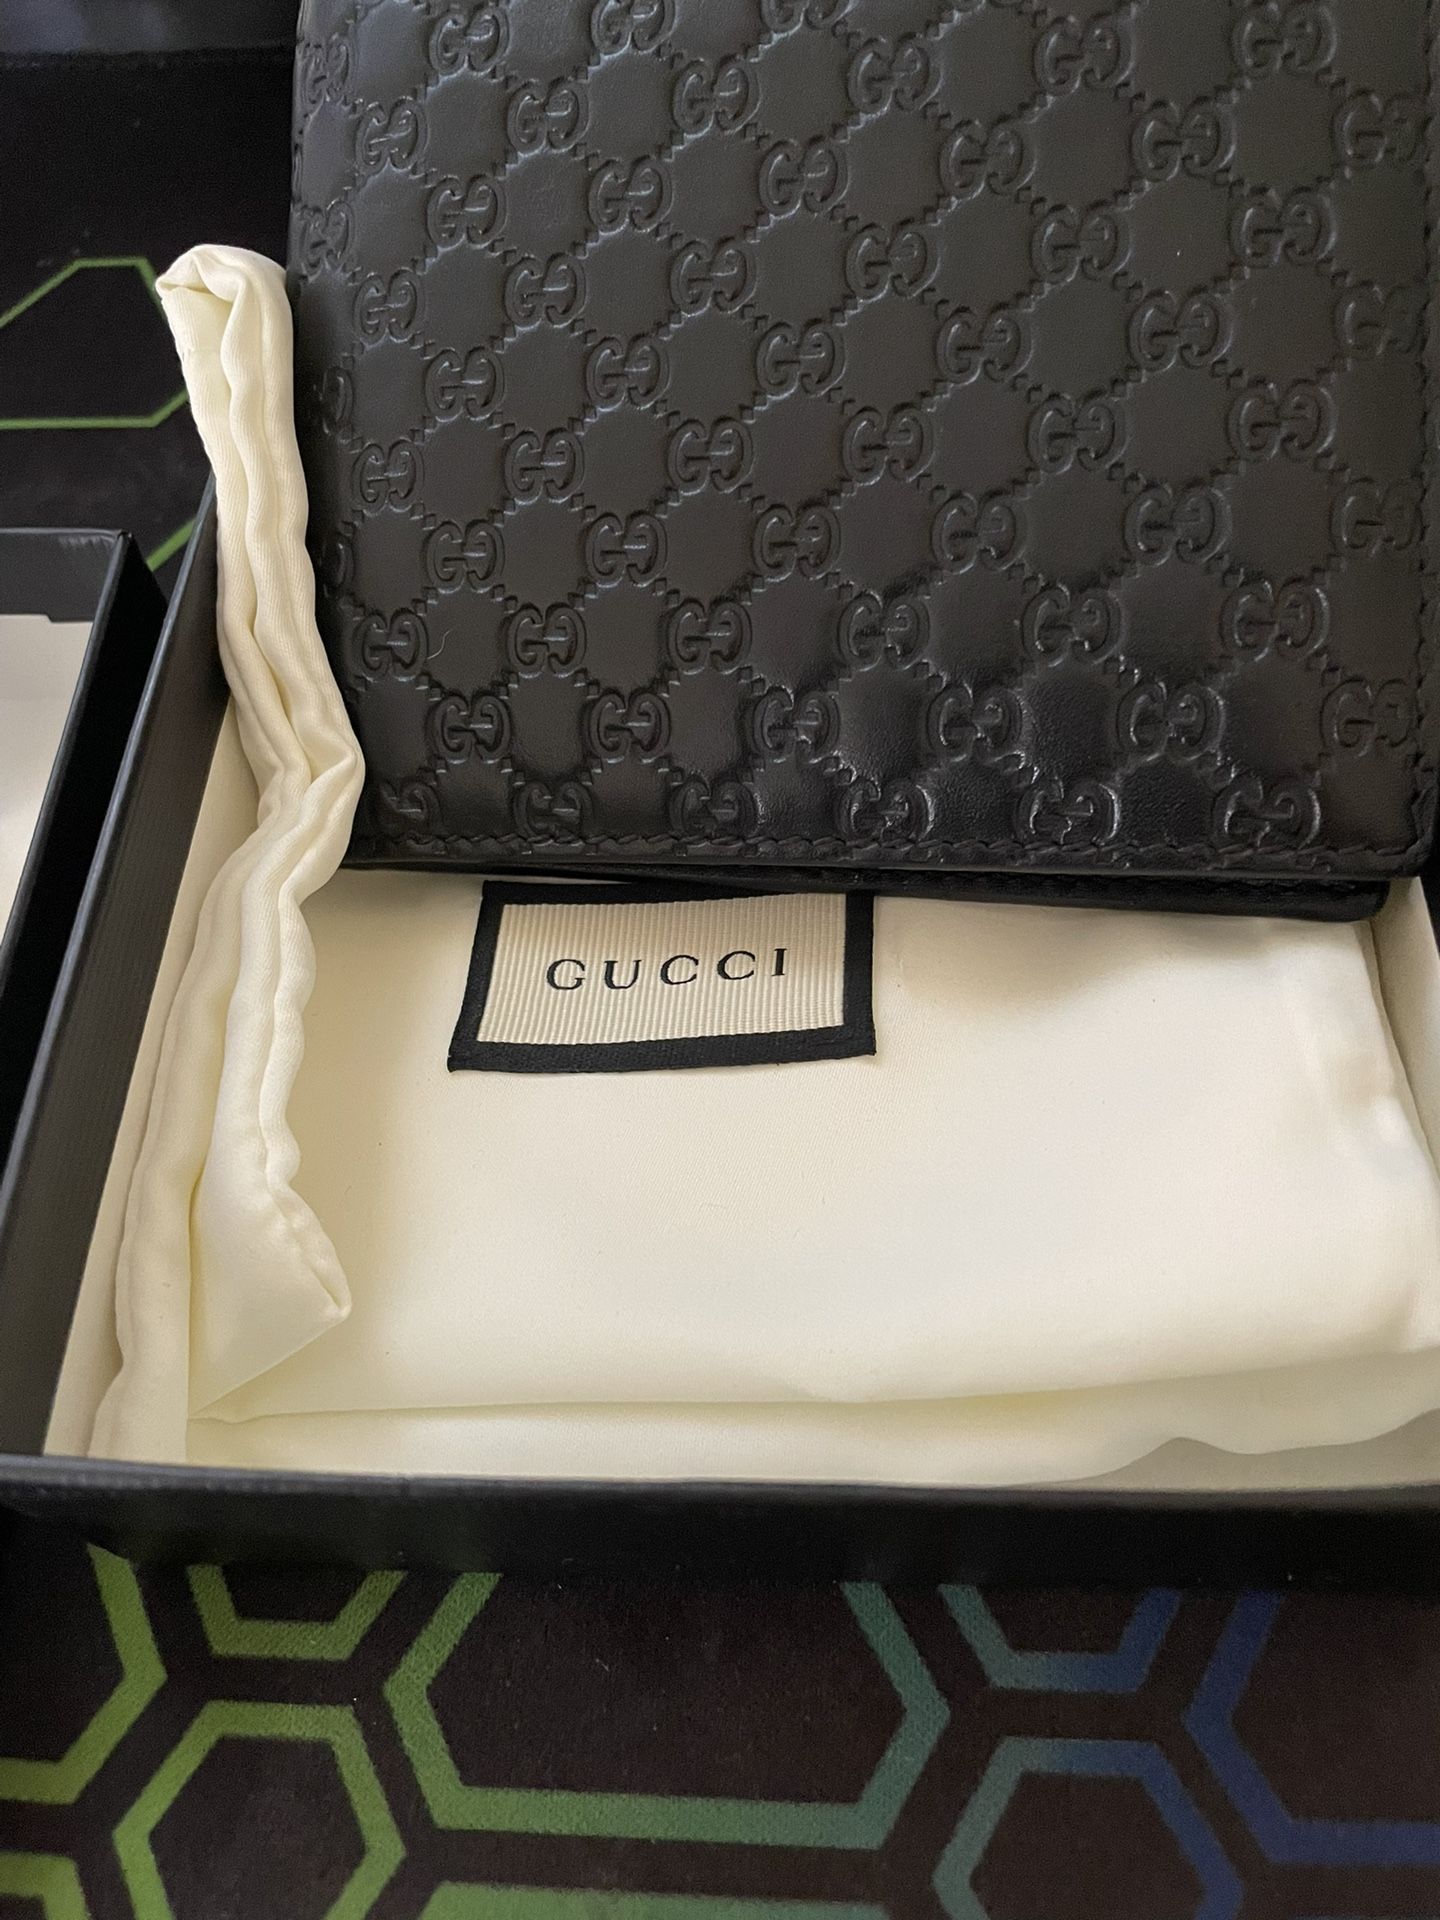 Gucci Men’s Wallet 